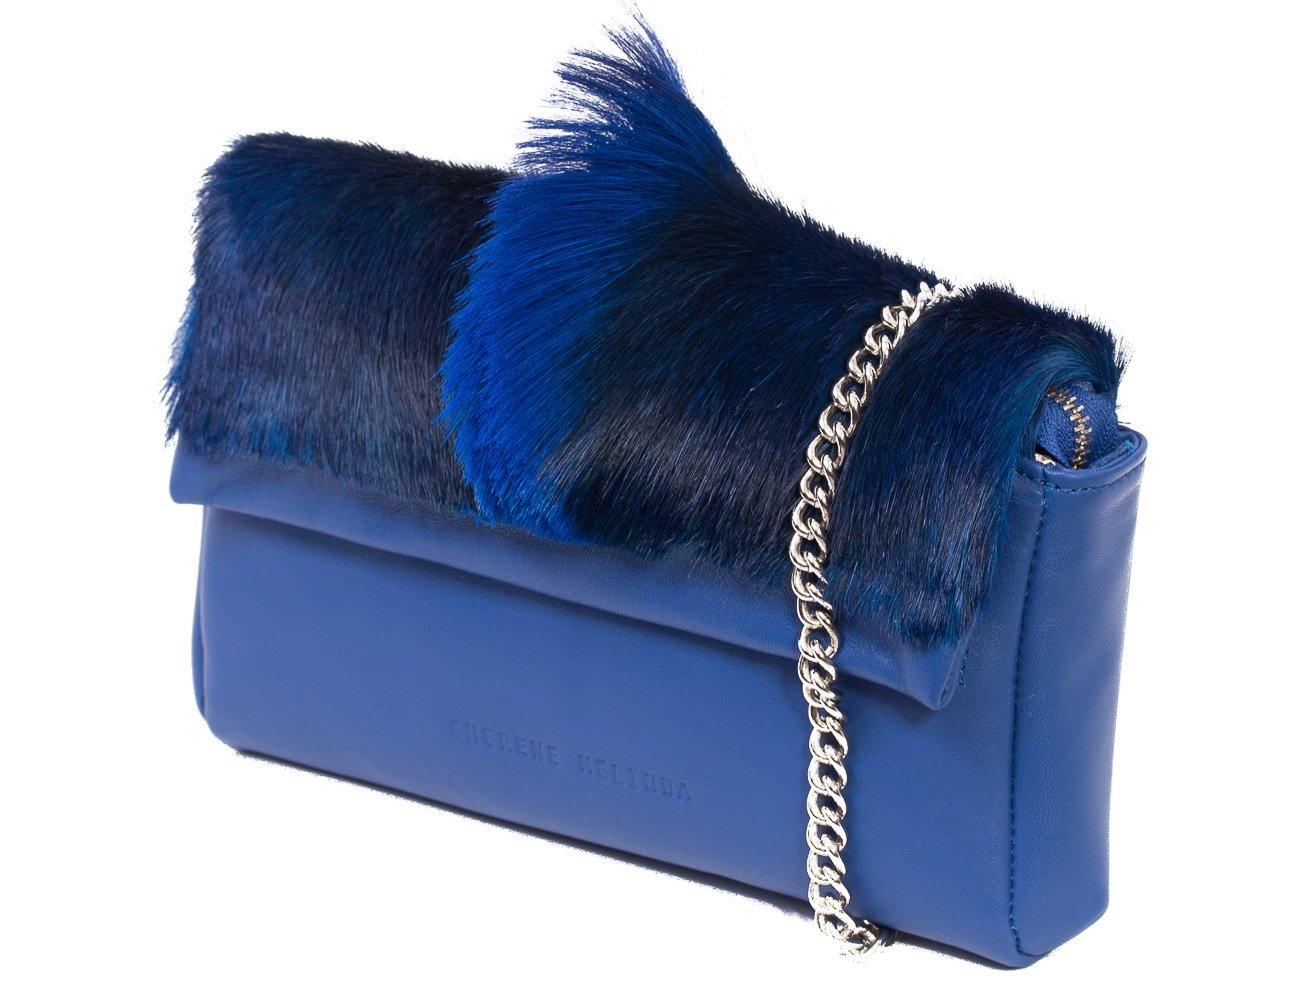 sherene melinda springbok hair-on-hide royal blue leather Sophy SS18 Clutch Bag Fan side angle strap